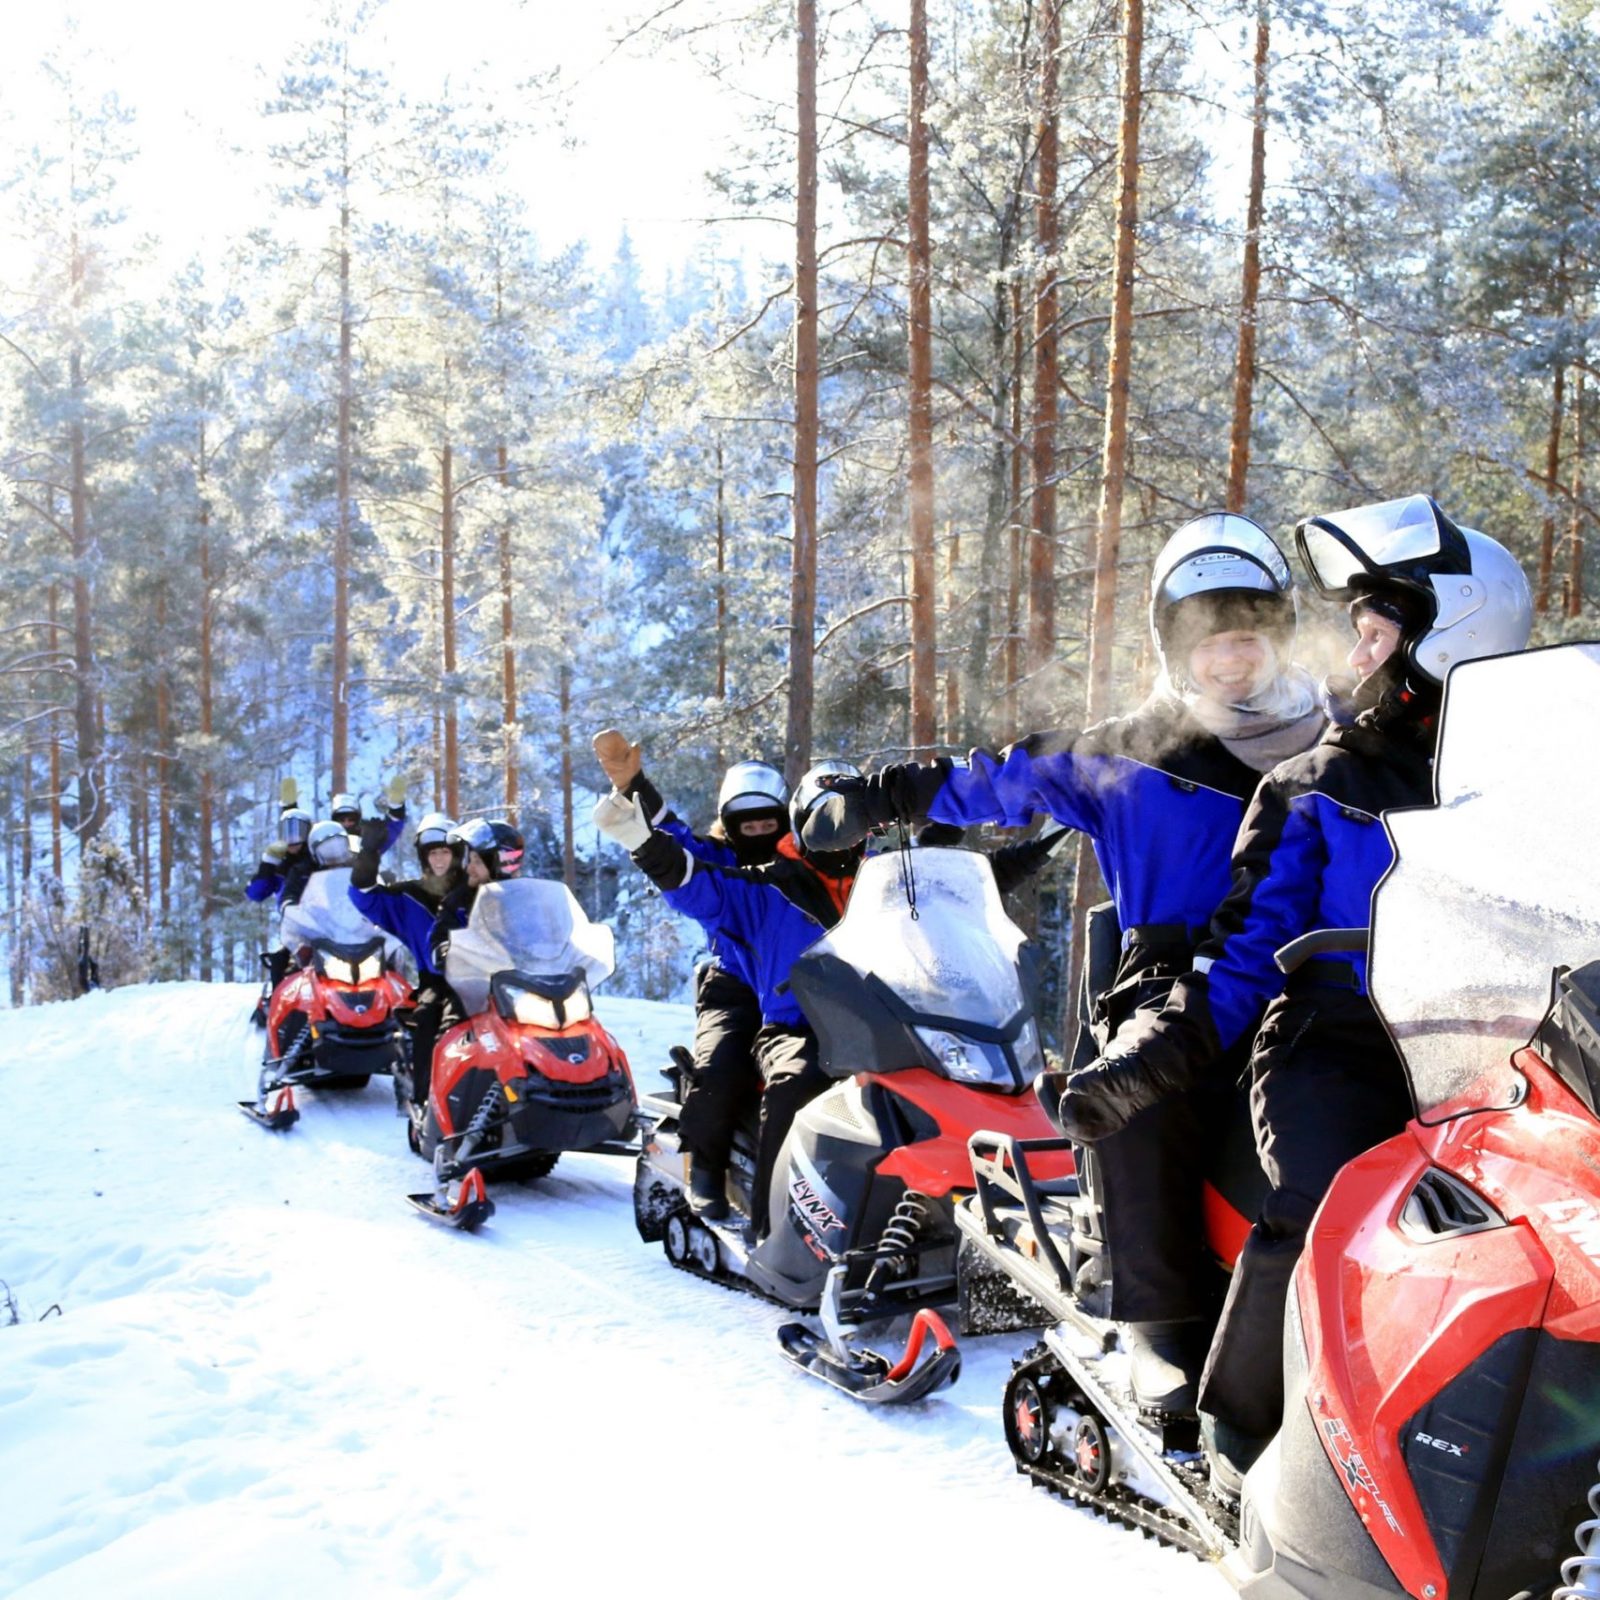 Lakeland / Snowmobile safaris on request, winter activities on request, Wild Nordic Finland @wildnordicfinland